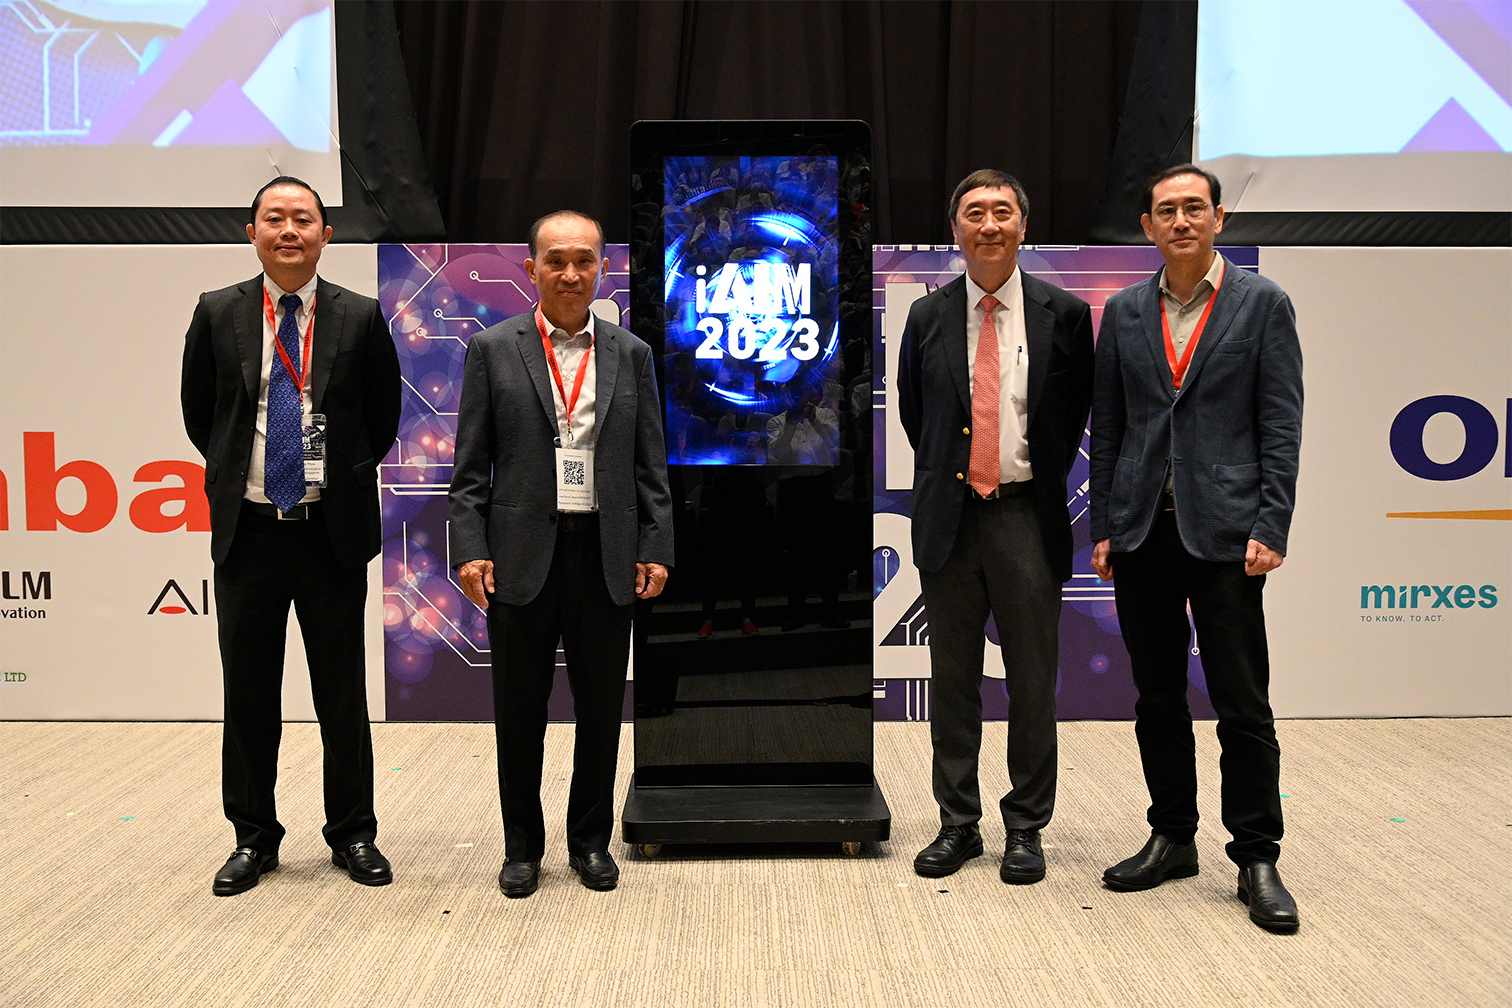 Group Photo taken at iAIM 2023 of Mr Tan Chuan Poh, Prof Joseph Sung, Prof Louis Phee and Prof Benjamin Seet